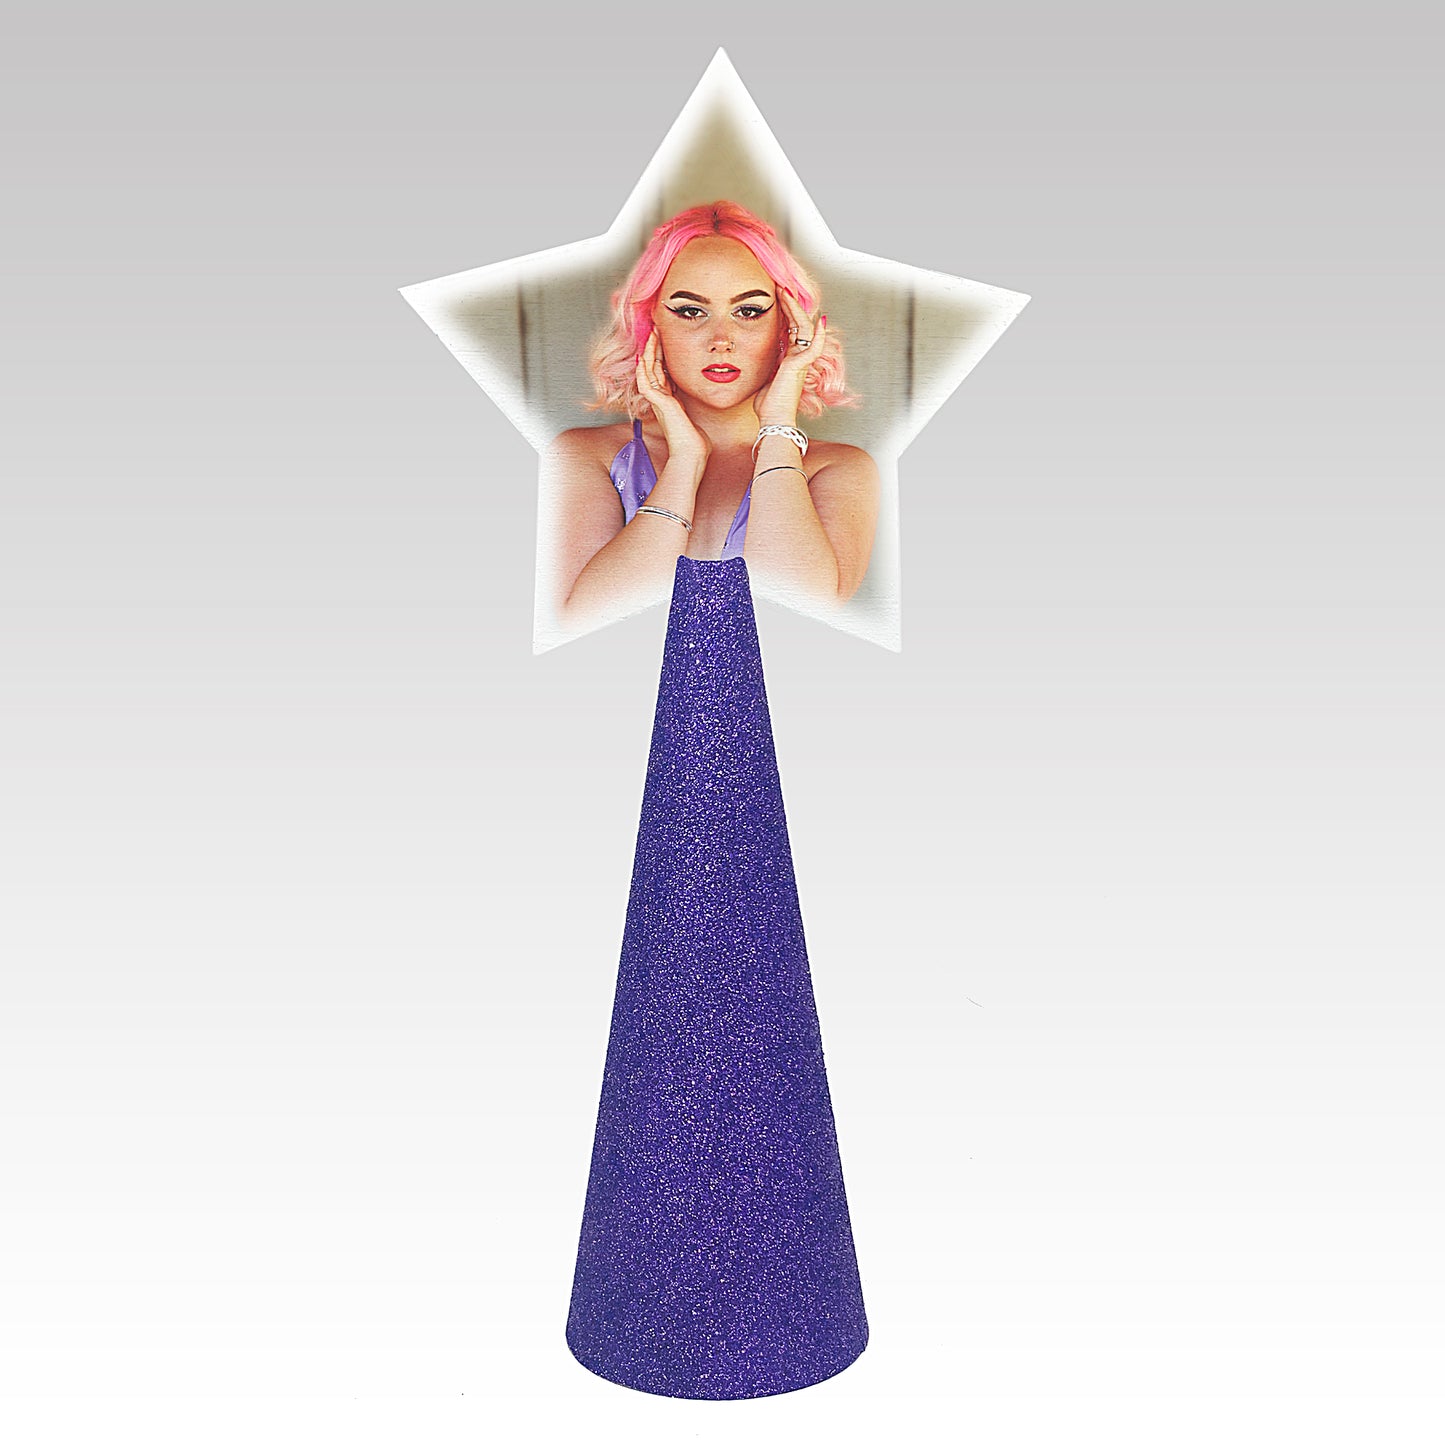 Custom tree topper - White Star with sample model photo - purple glitter cone